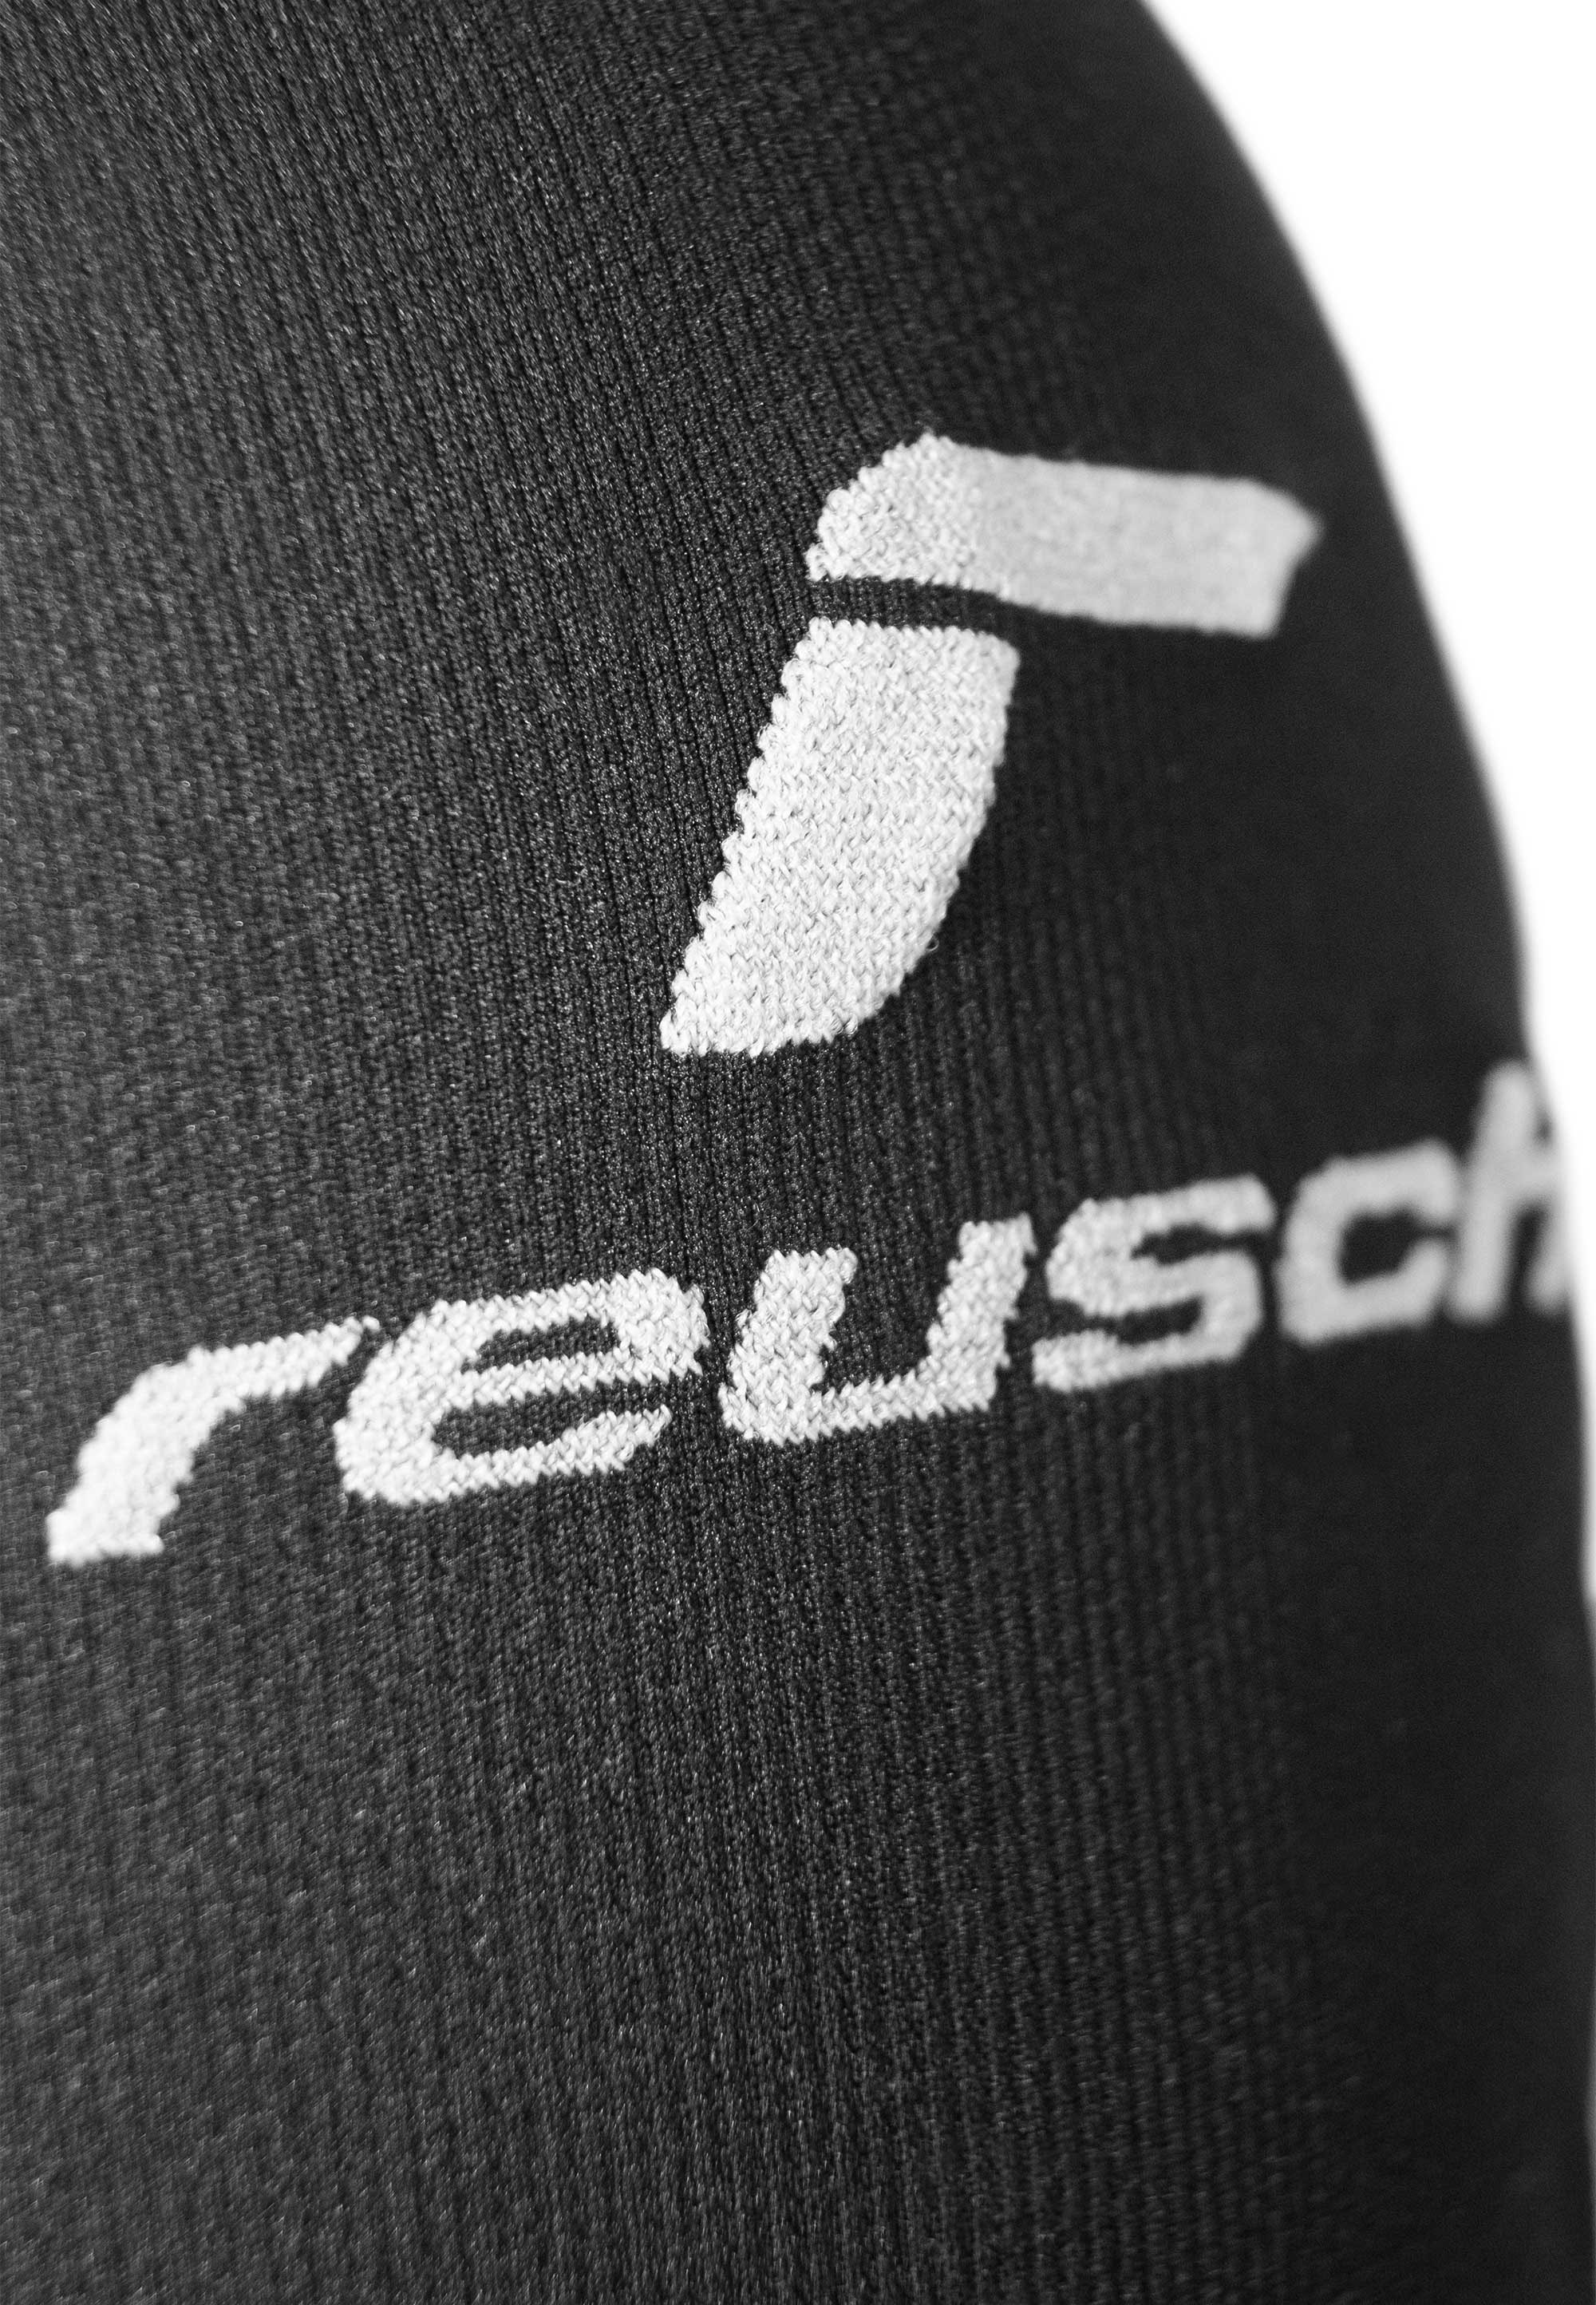 Reusch Funktionsshirt »Reusch Underwear Set Man 3/4 Pants«, (2 tlg.), mit hohem Tragekomfort